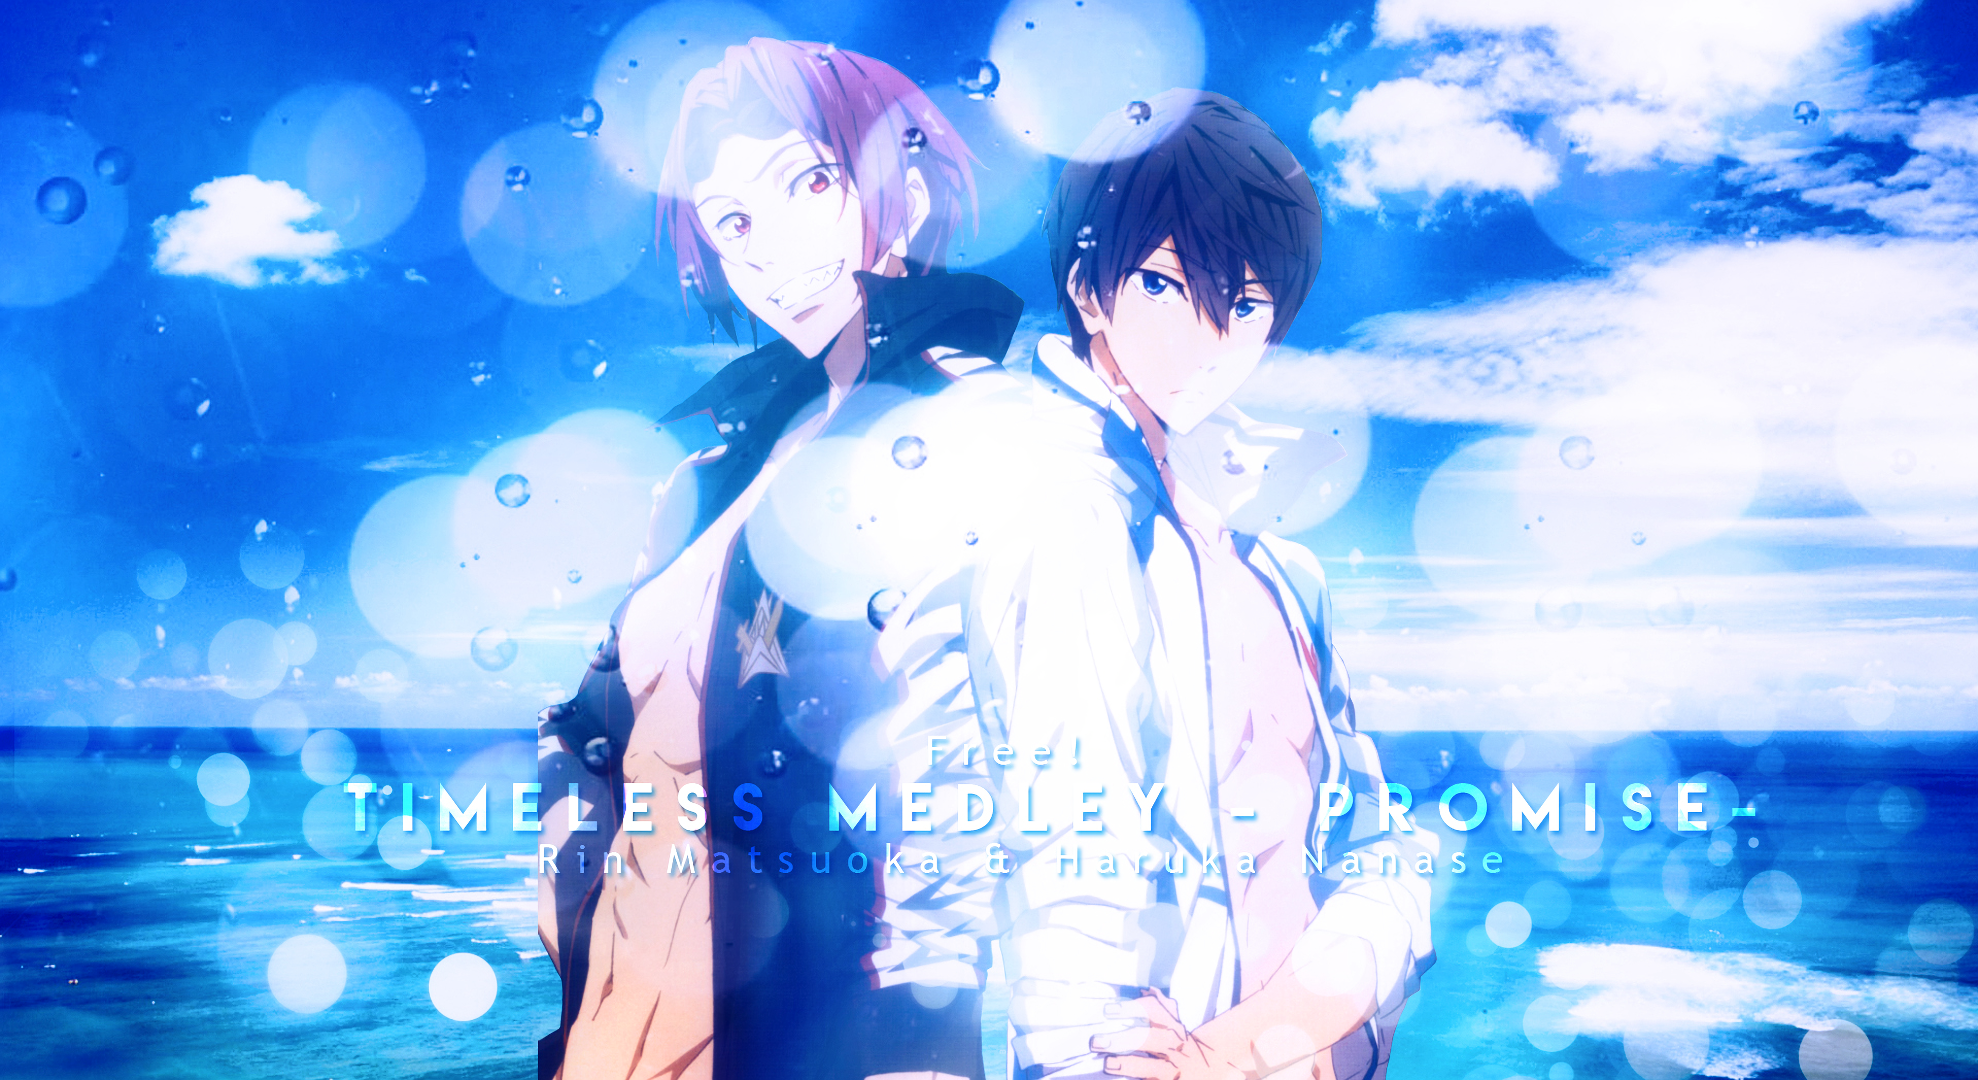 Free! Timeless Medley - Promise - Wallpaper by Yukisa